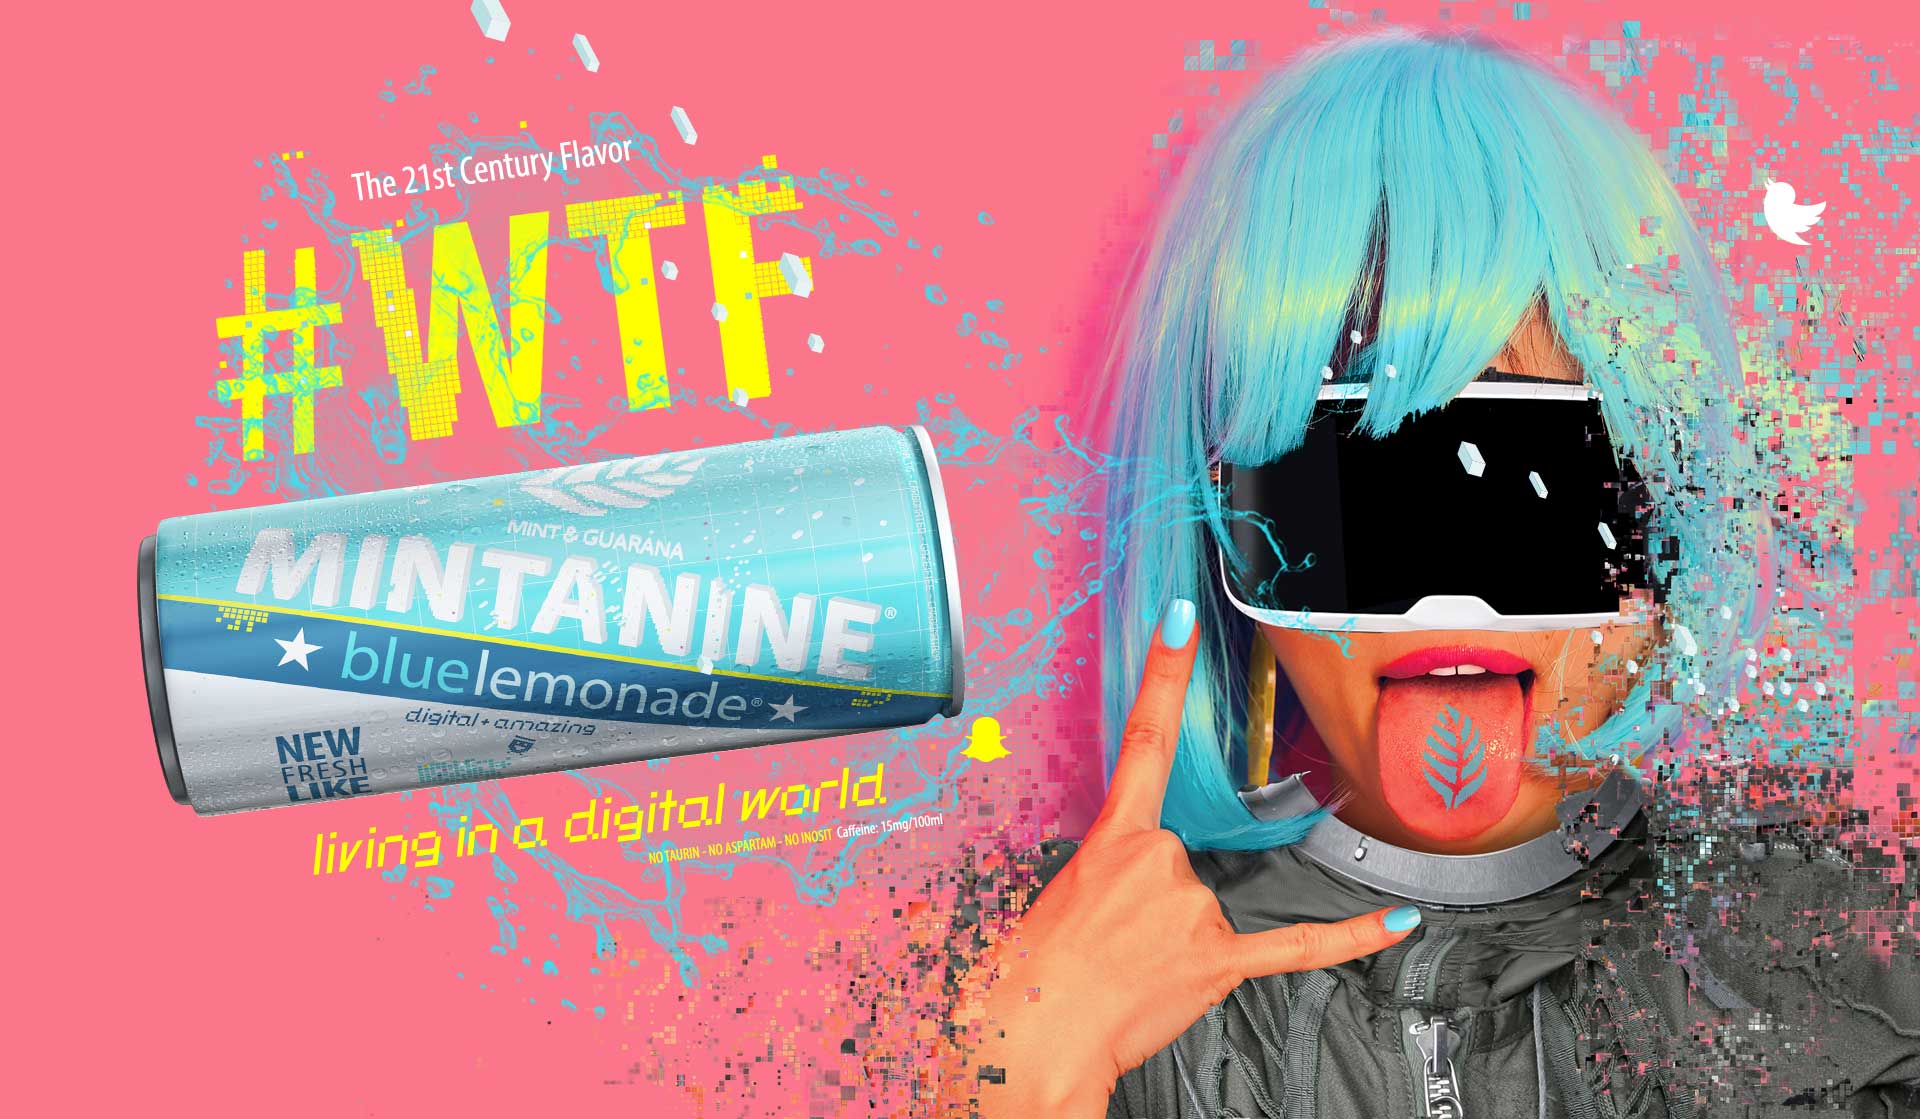 MINTANINE blue-lemonade 